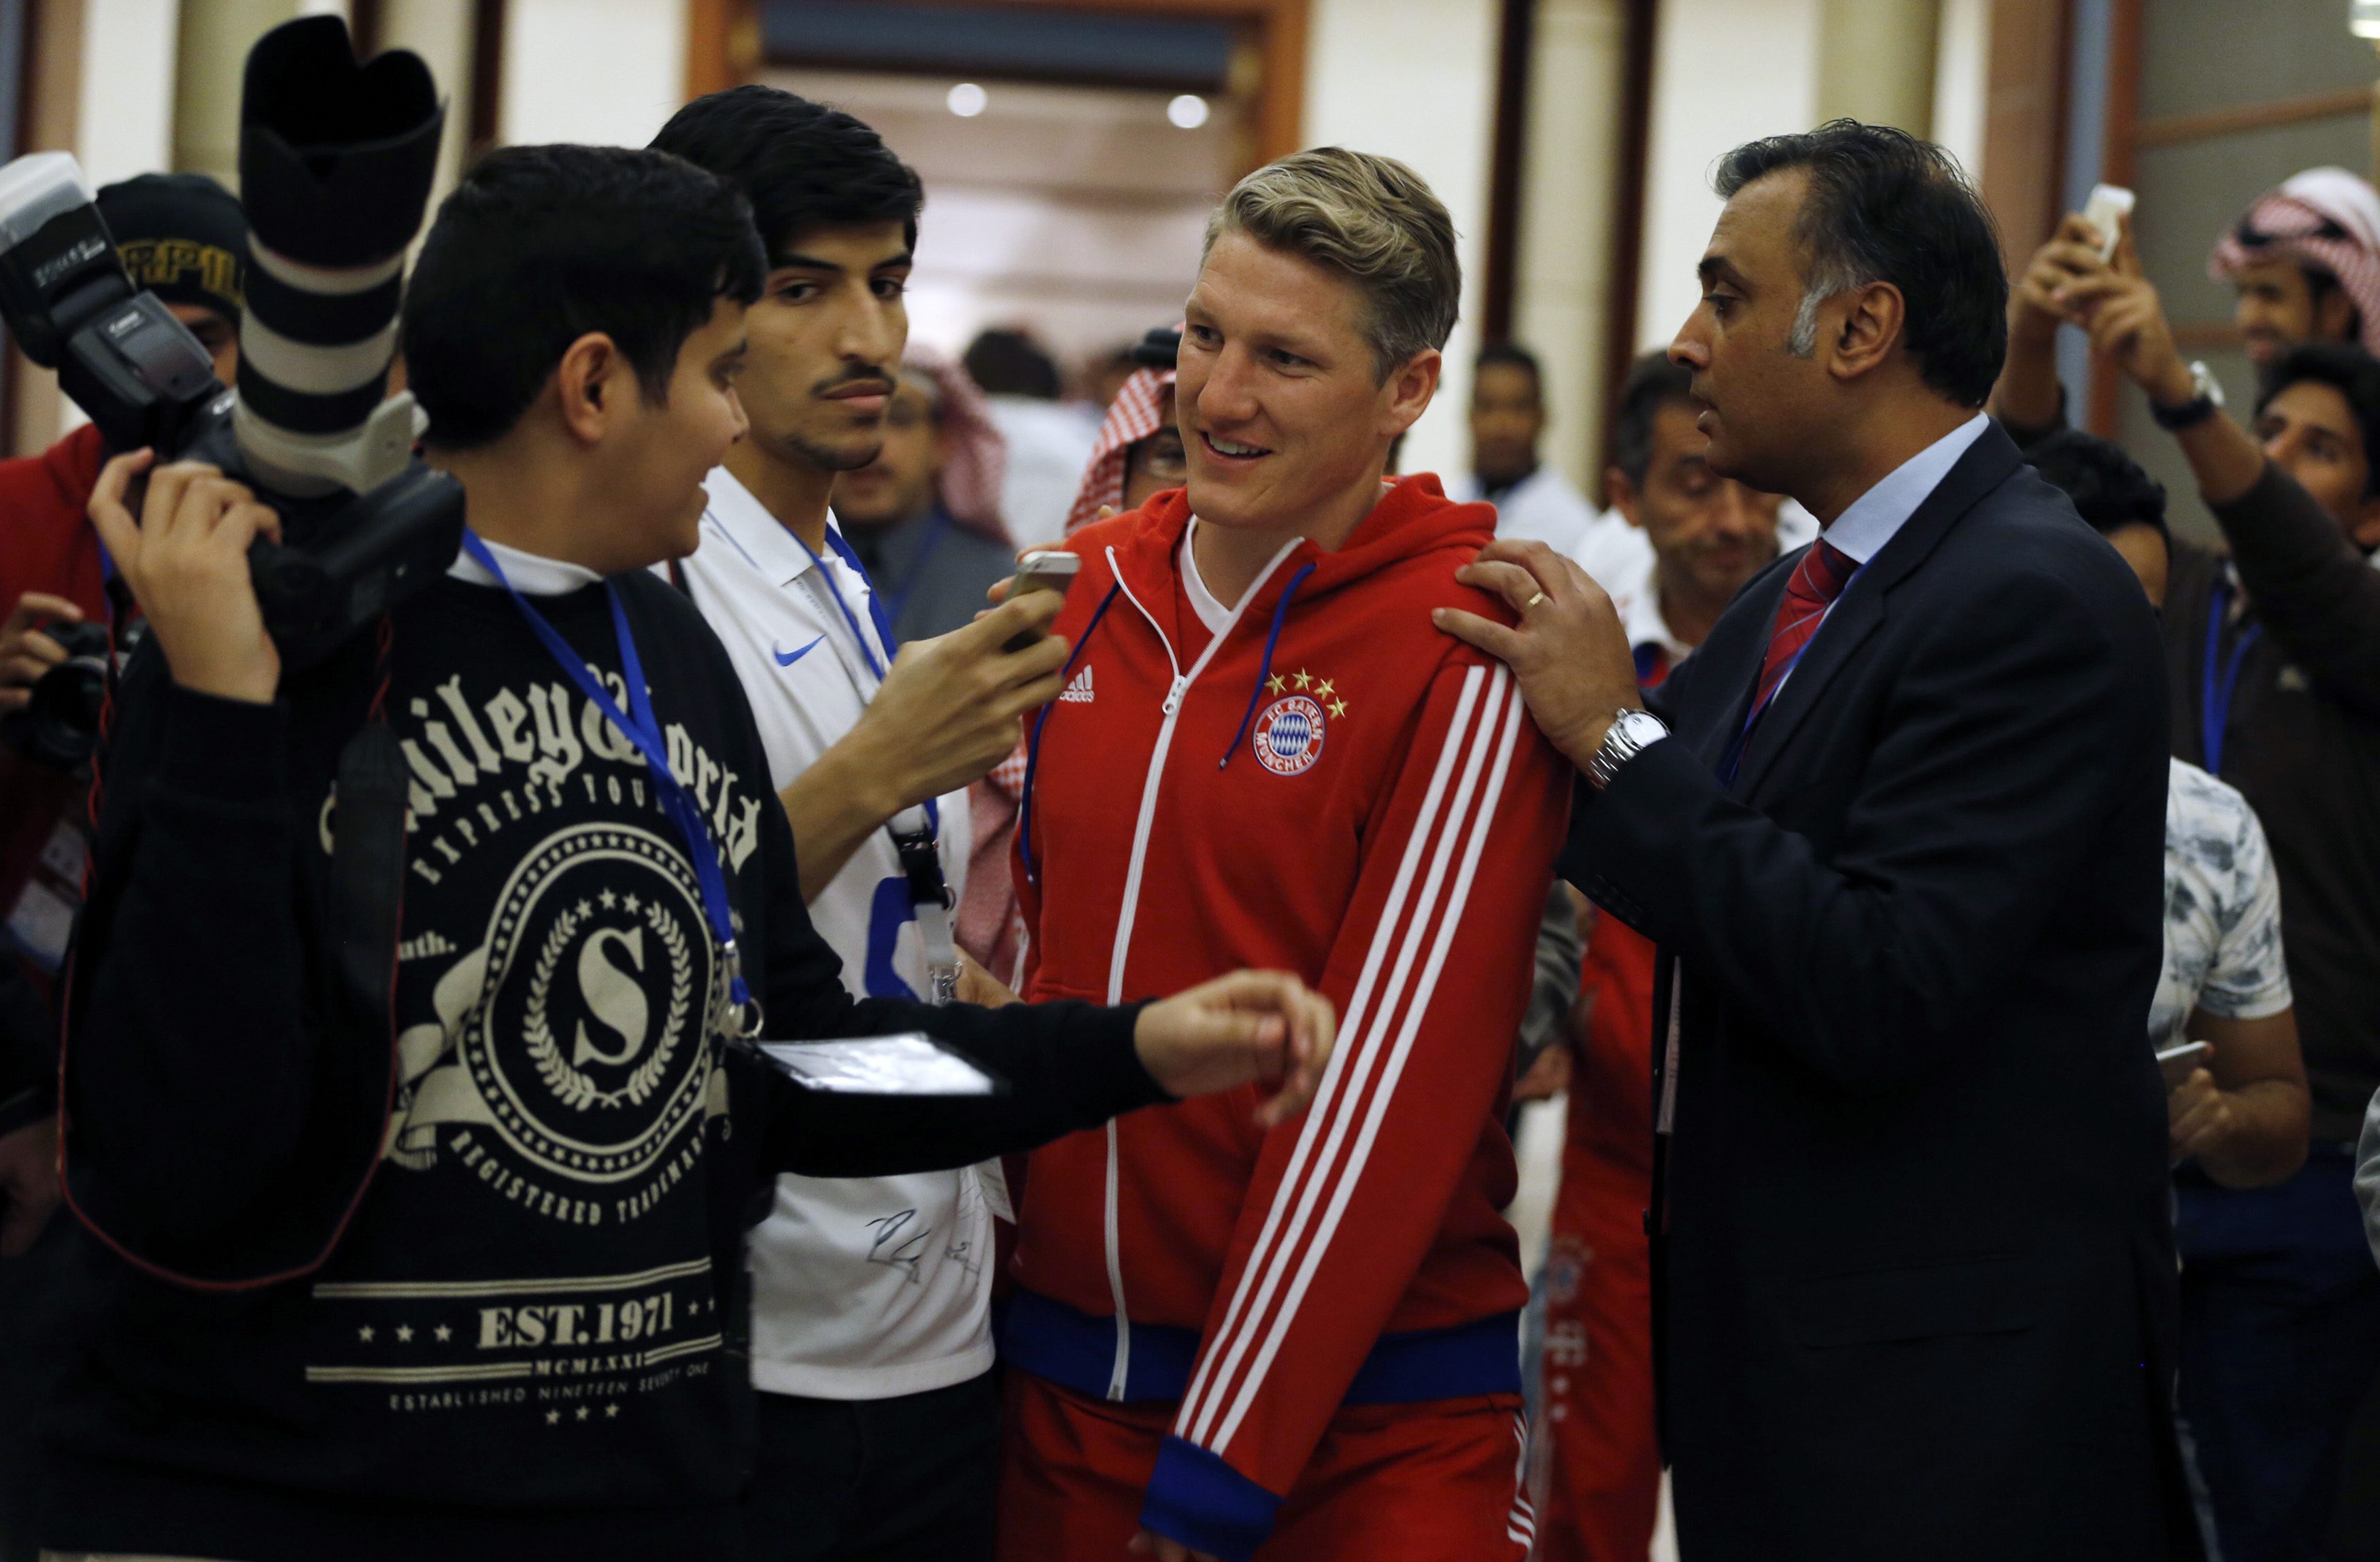 Bayern Munich's Bastian Schweinsteiger (C) arrives at a hotel in Riyadh January 17, 2015. REUTERS/Faisal AlNasser(SAUDI ARABIA - Tags: SPORT SOCCER)